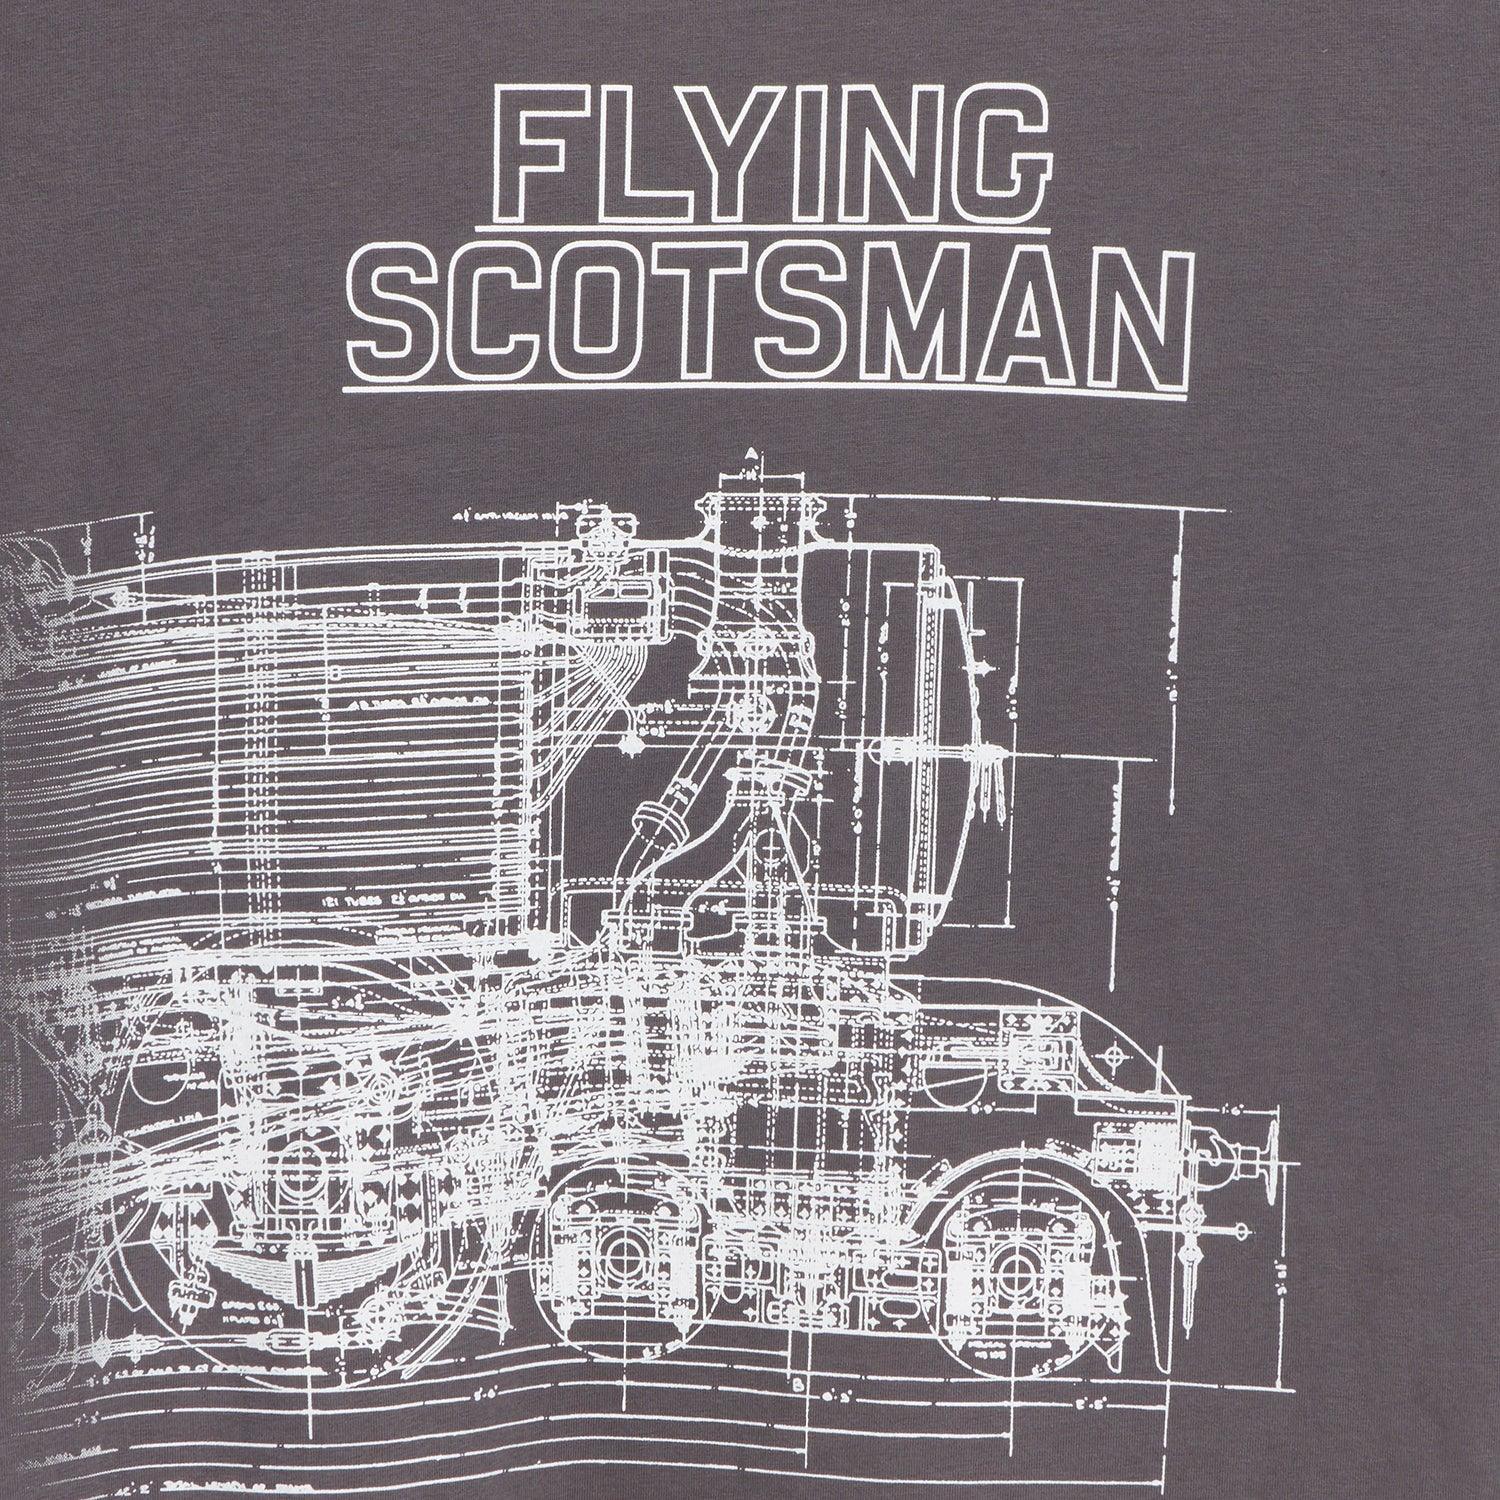 National Railway Museum Flying Scotsman Blueprint T-Shirt - Clothing - Science Museum Shop